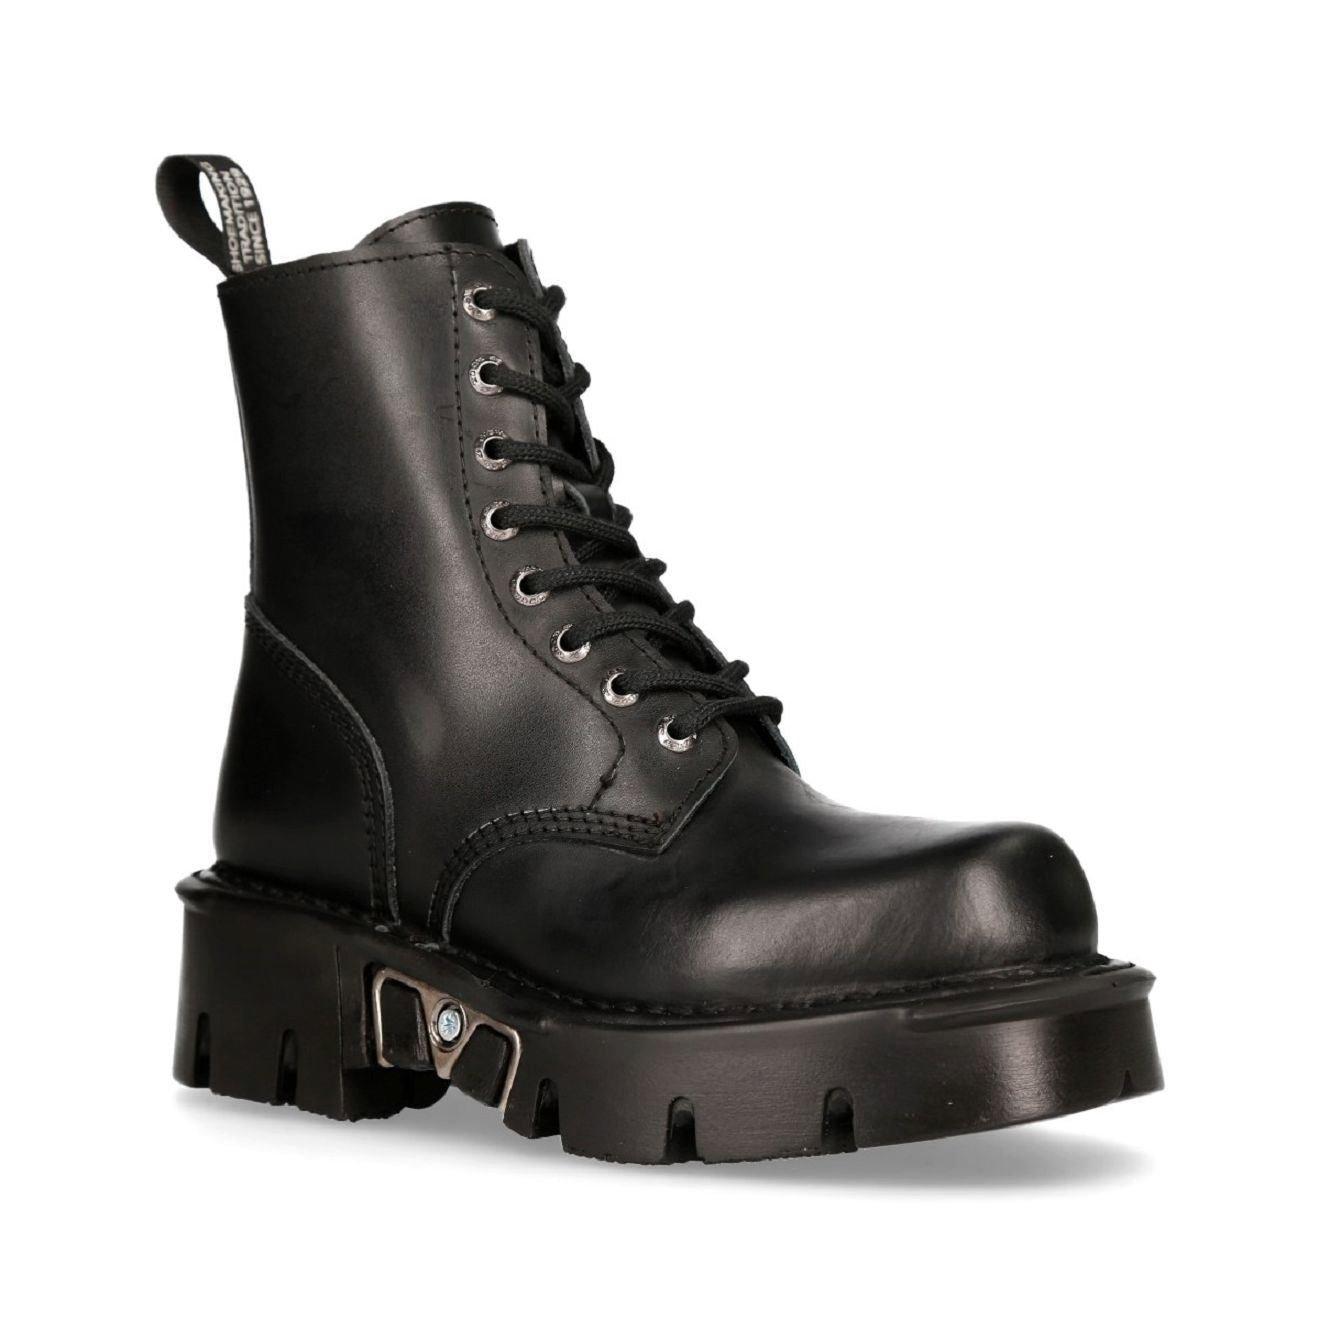 Байкерские ботинки в стиле милитари унисекс в готическом стиле New Rock — MILI084N-S3, черный